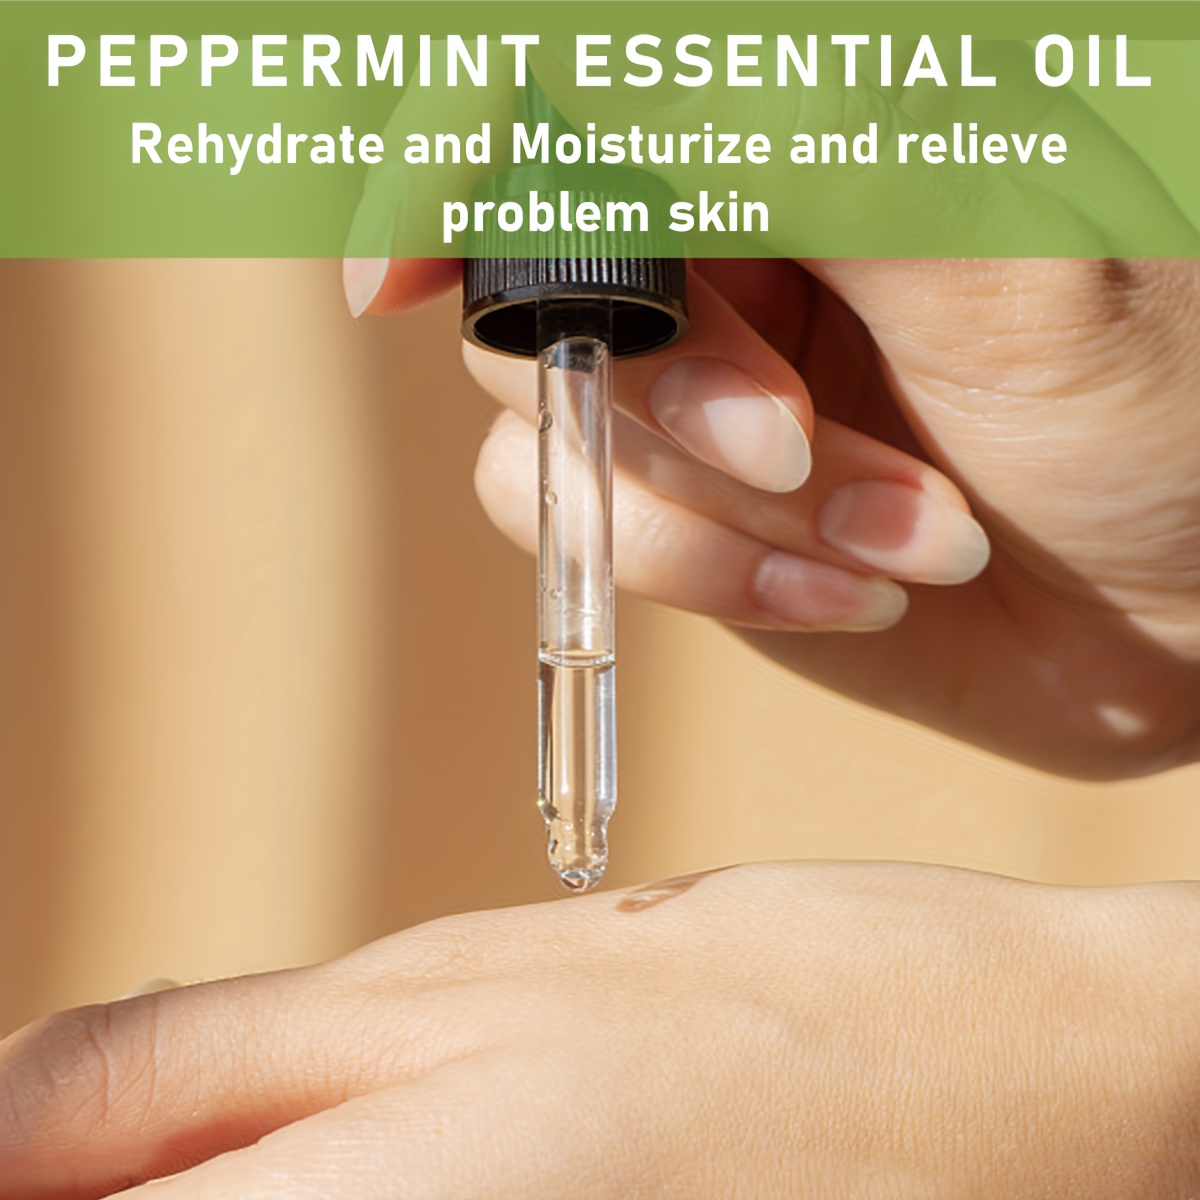 AROMATICA Awakening Body Oil Peppermint & Eucalyptus - 100ML / 3.38 fl. oz.  - Aromatherapy Massage Oil